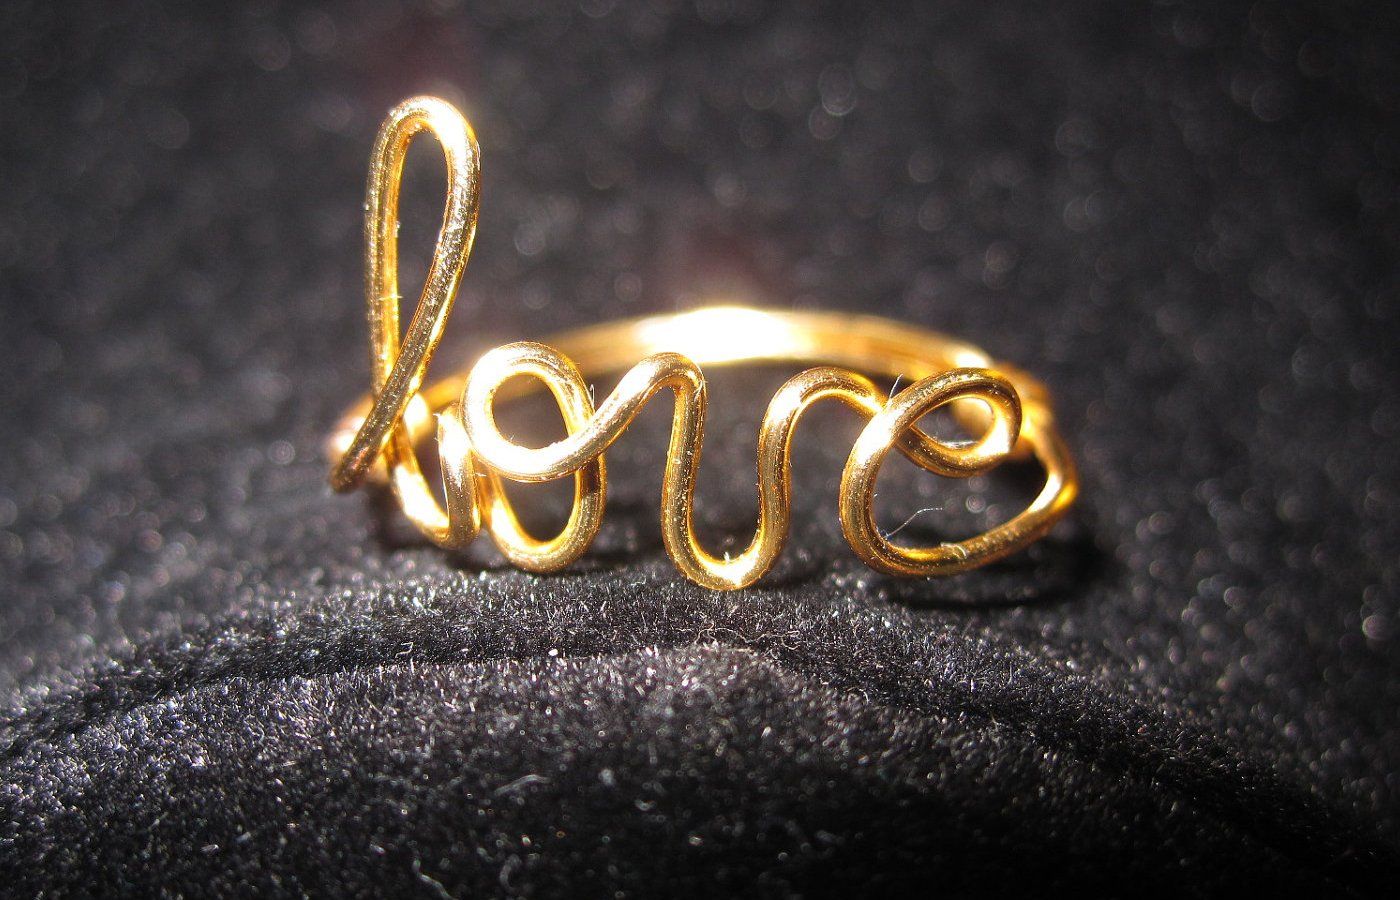 Gold Love Ring Cover Photowallpapertip.com